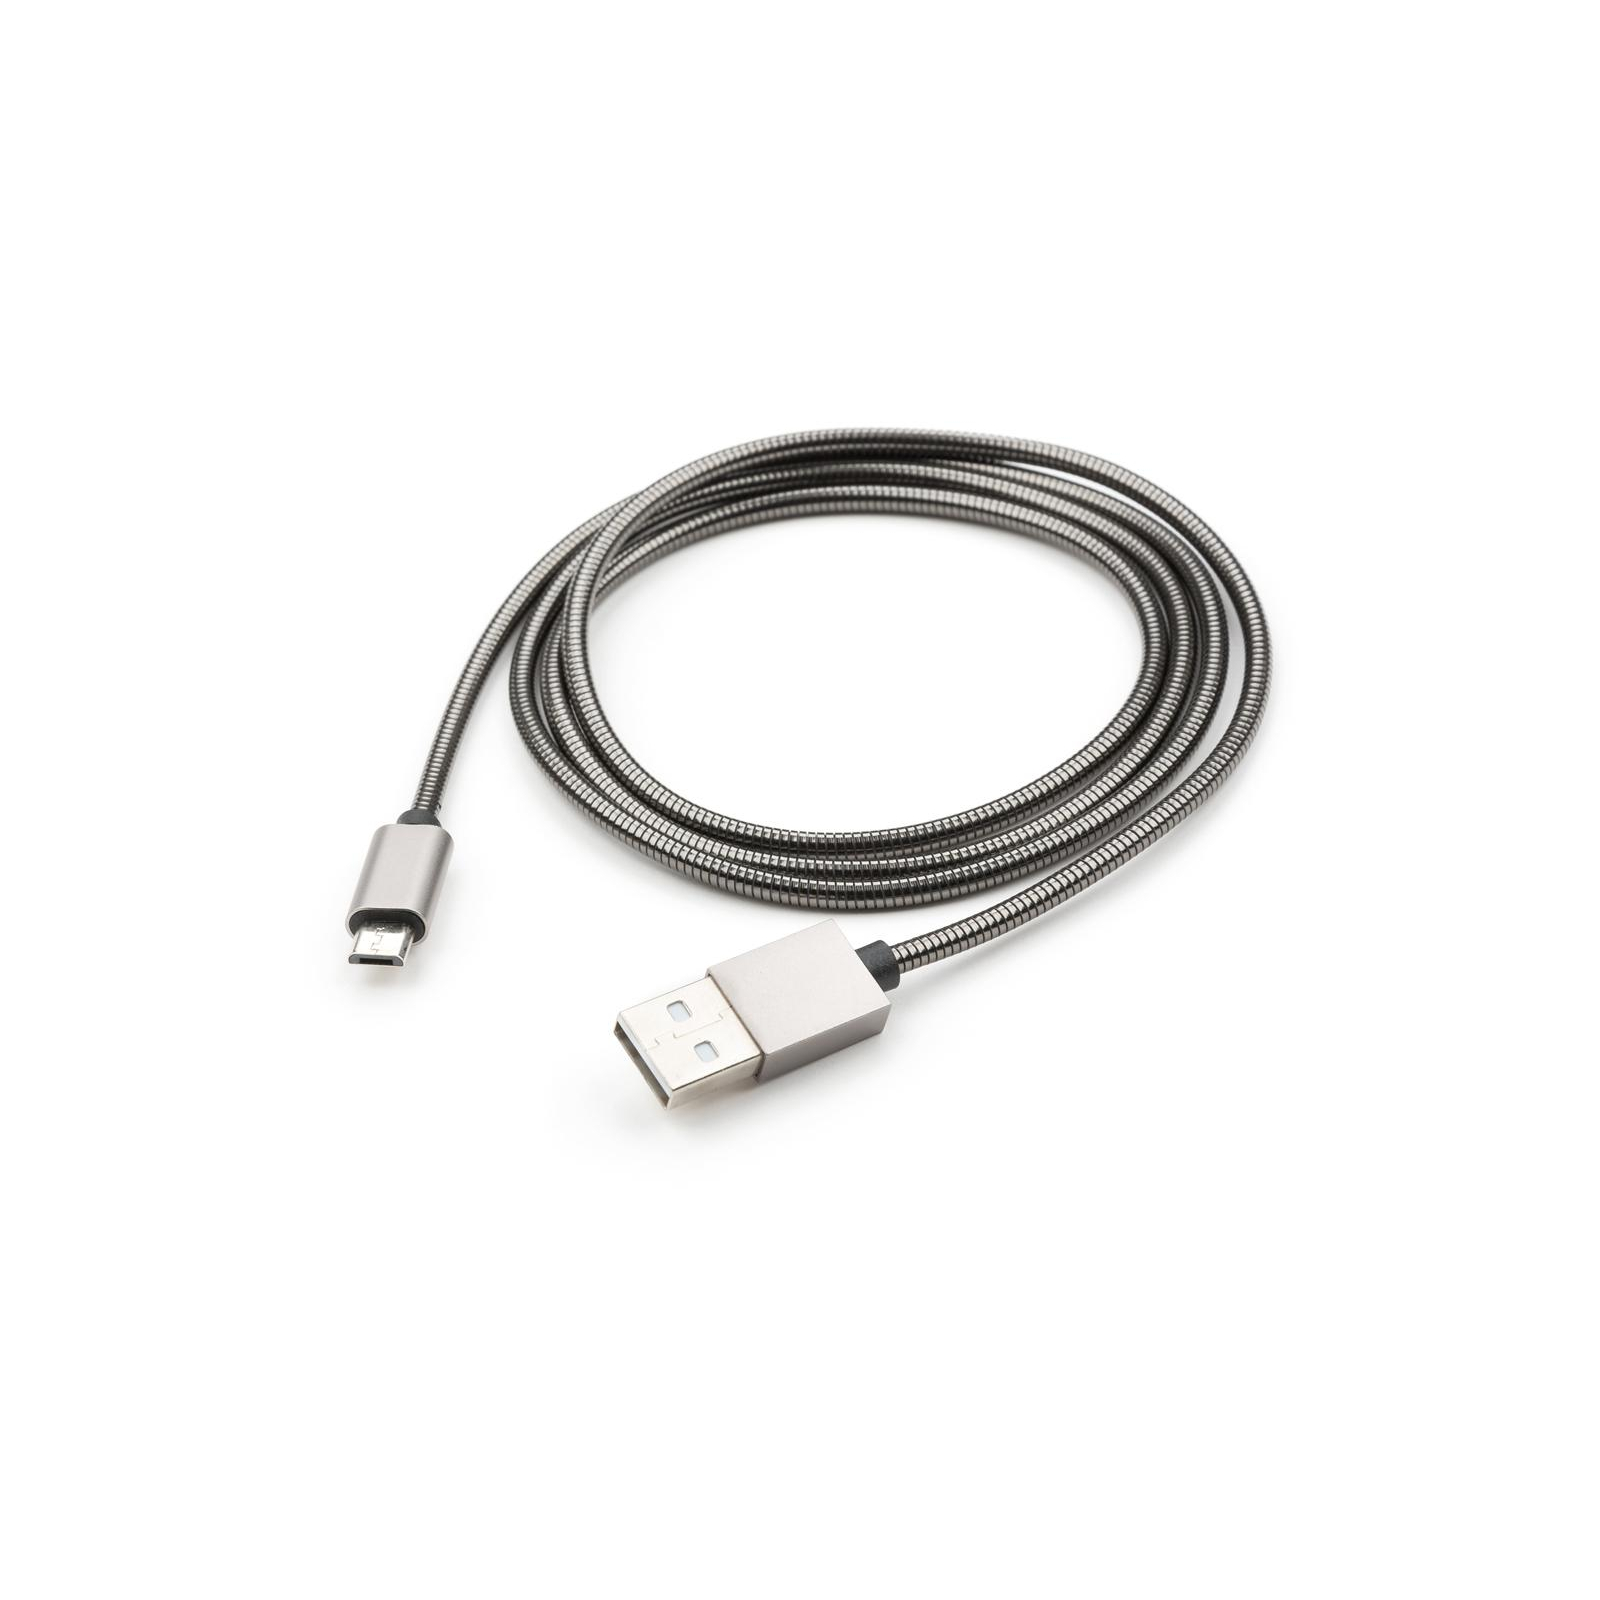 Дата кабель USB 2.0 AM to Micro 5P 1m stainless steel gray Vinga (VCPDCMSSJ1GR) зображення 3